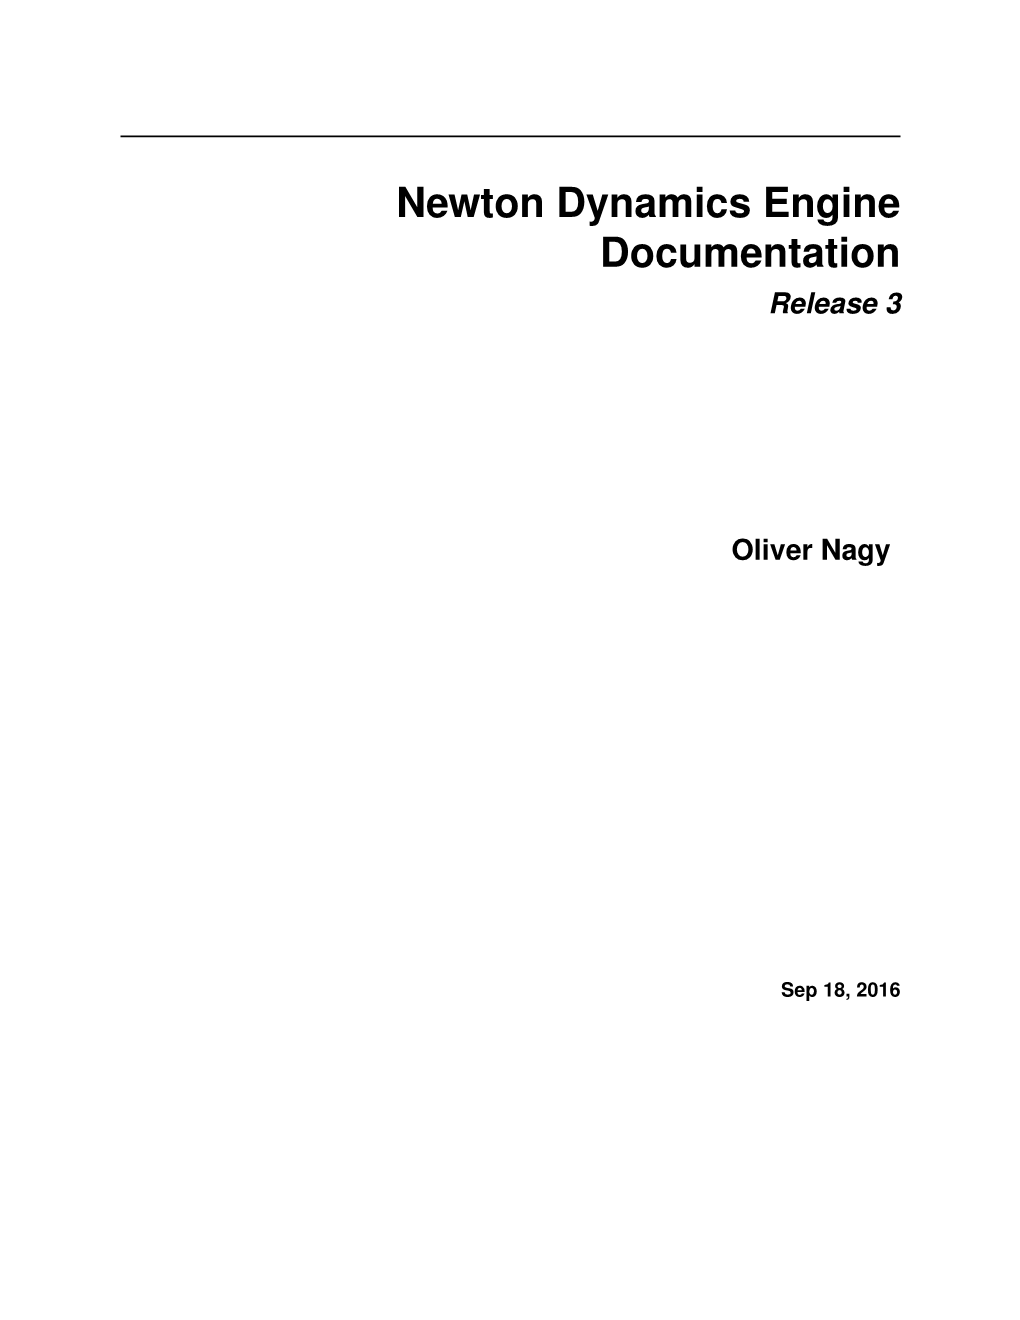 Newton Dynamics Engine Documentation Release 3